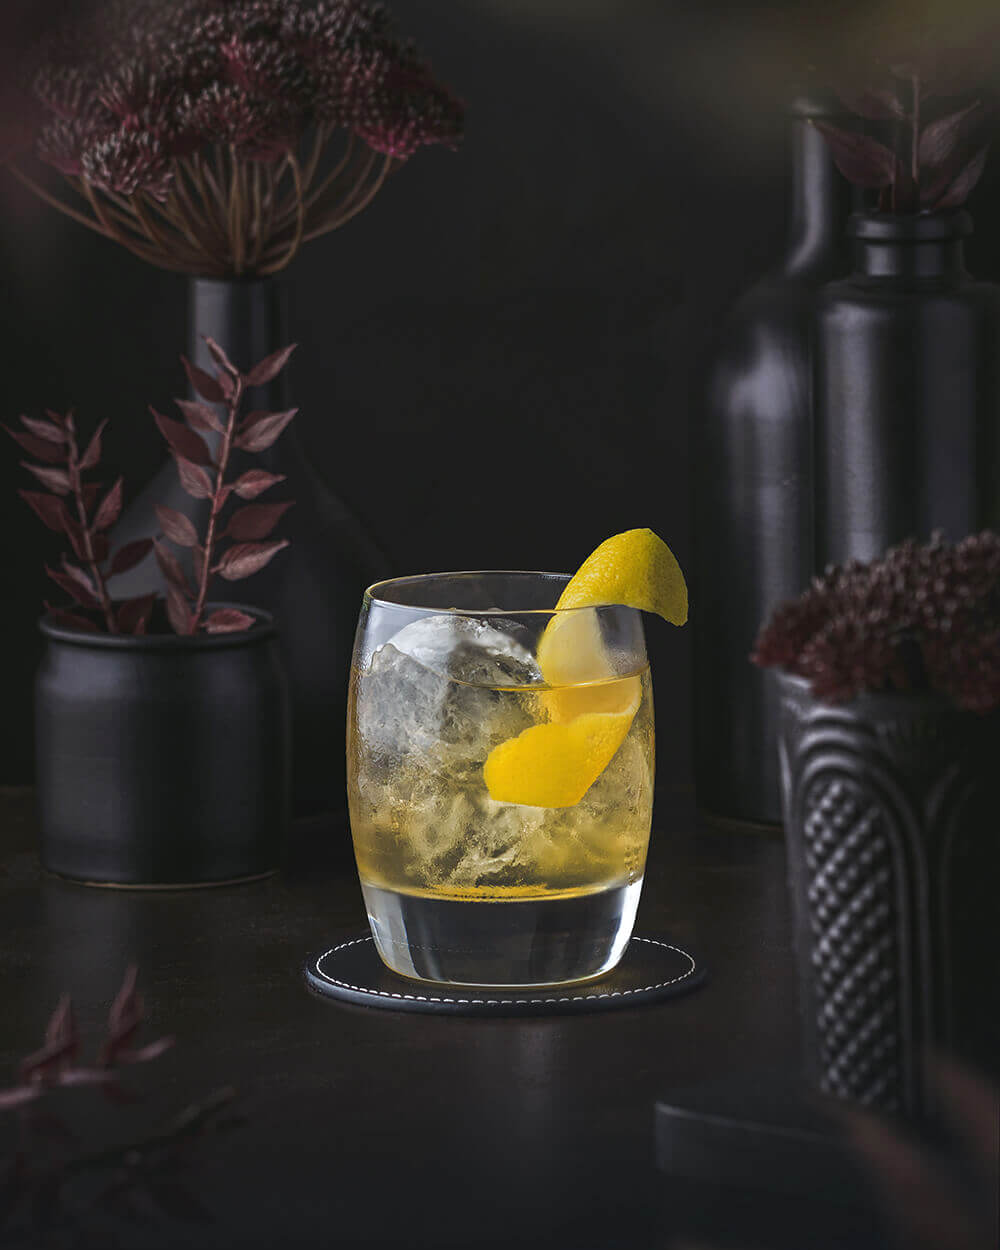 Padovani Cocktail - Scotch with Elderflower liqueur. Yellow orange drink served on the rocks. garnished with a lemon twist.